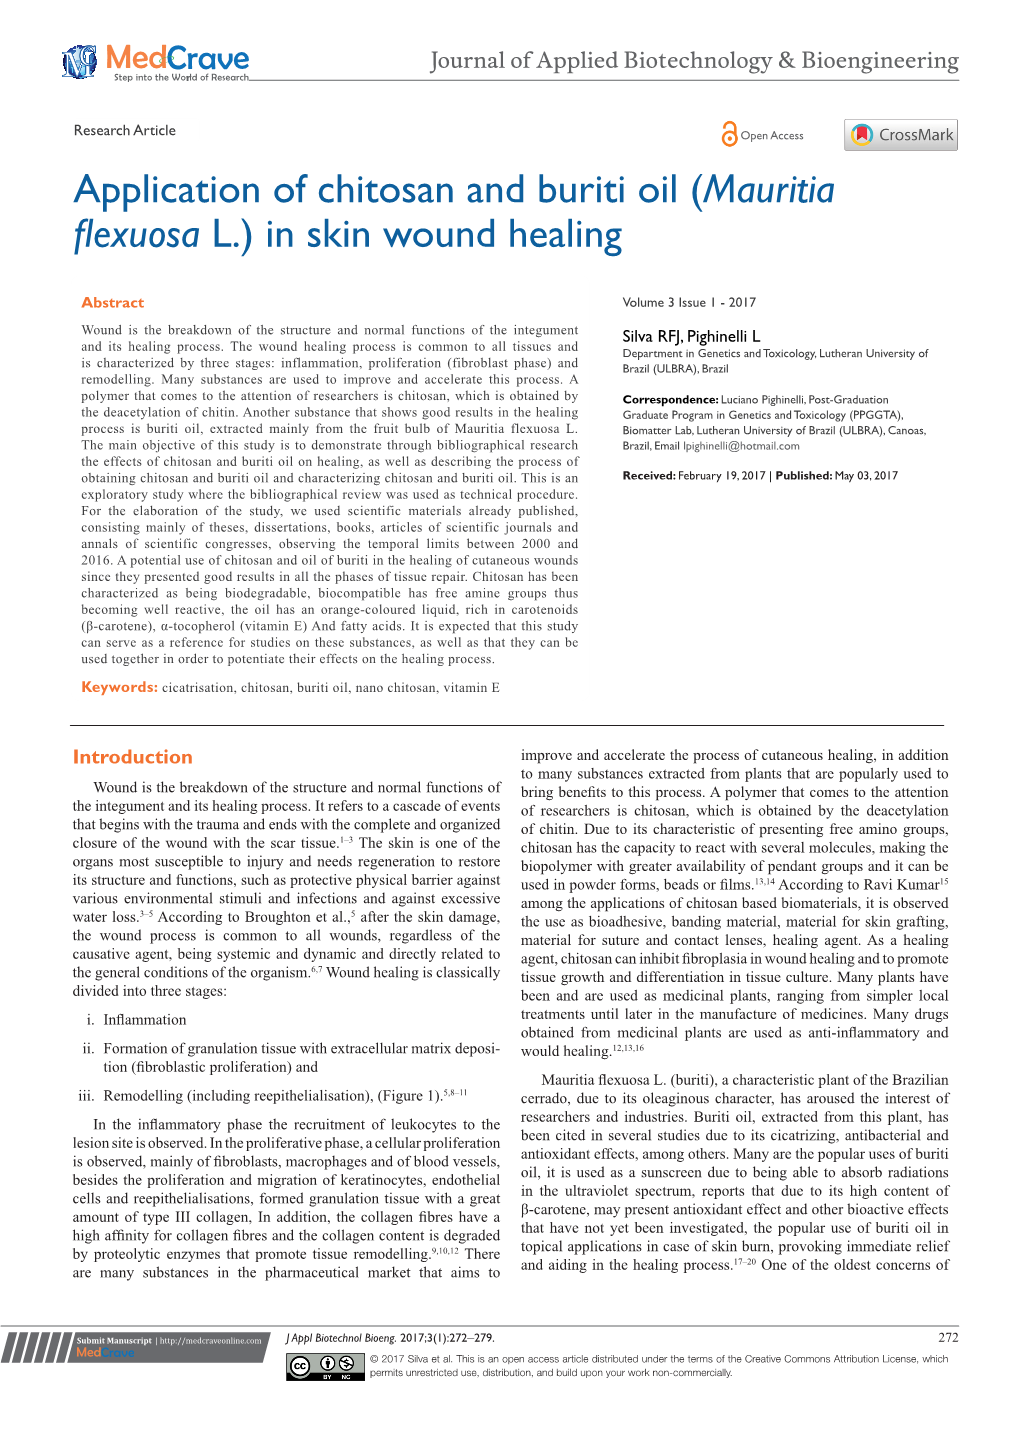 Application of Chitosan and Buriti Oil (Mauritia Flexuosa L.) in Skin Wound Healing